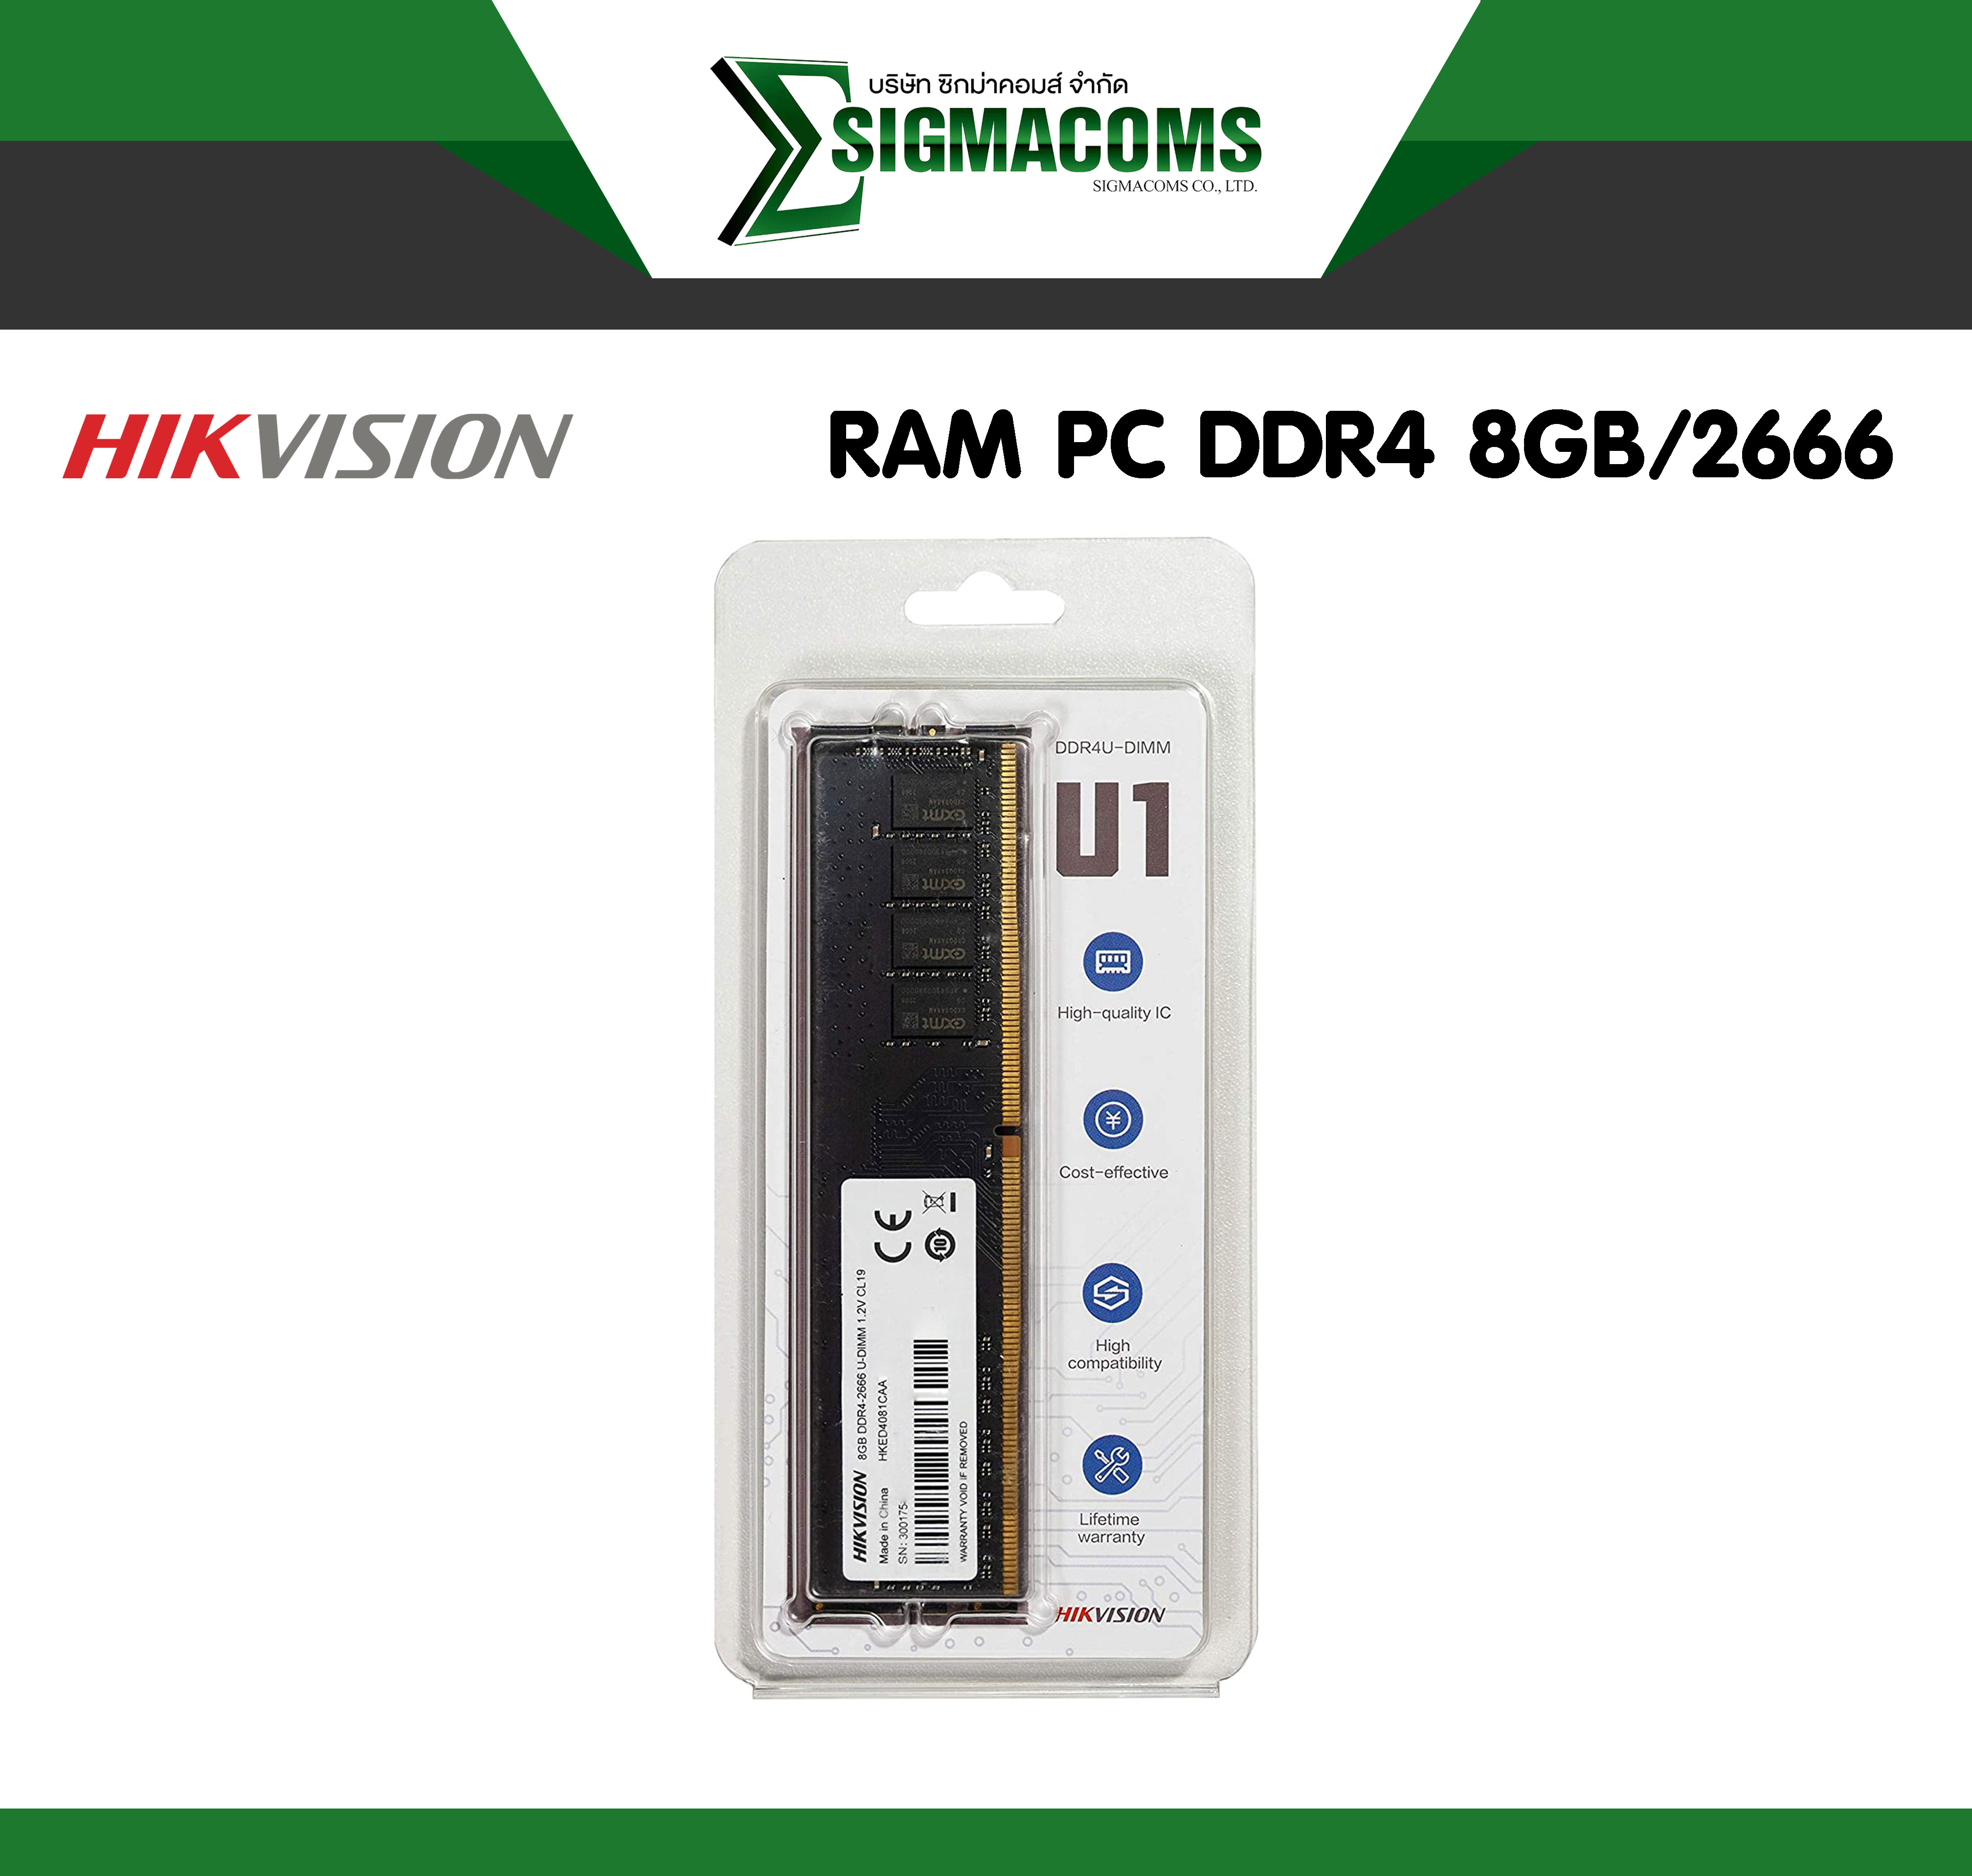 RAM PC Hikvision DDR4 8GB/2666 ของใหม่ !! ประกัน Lifetime